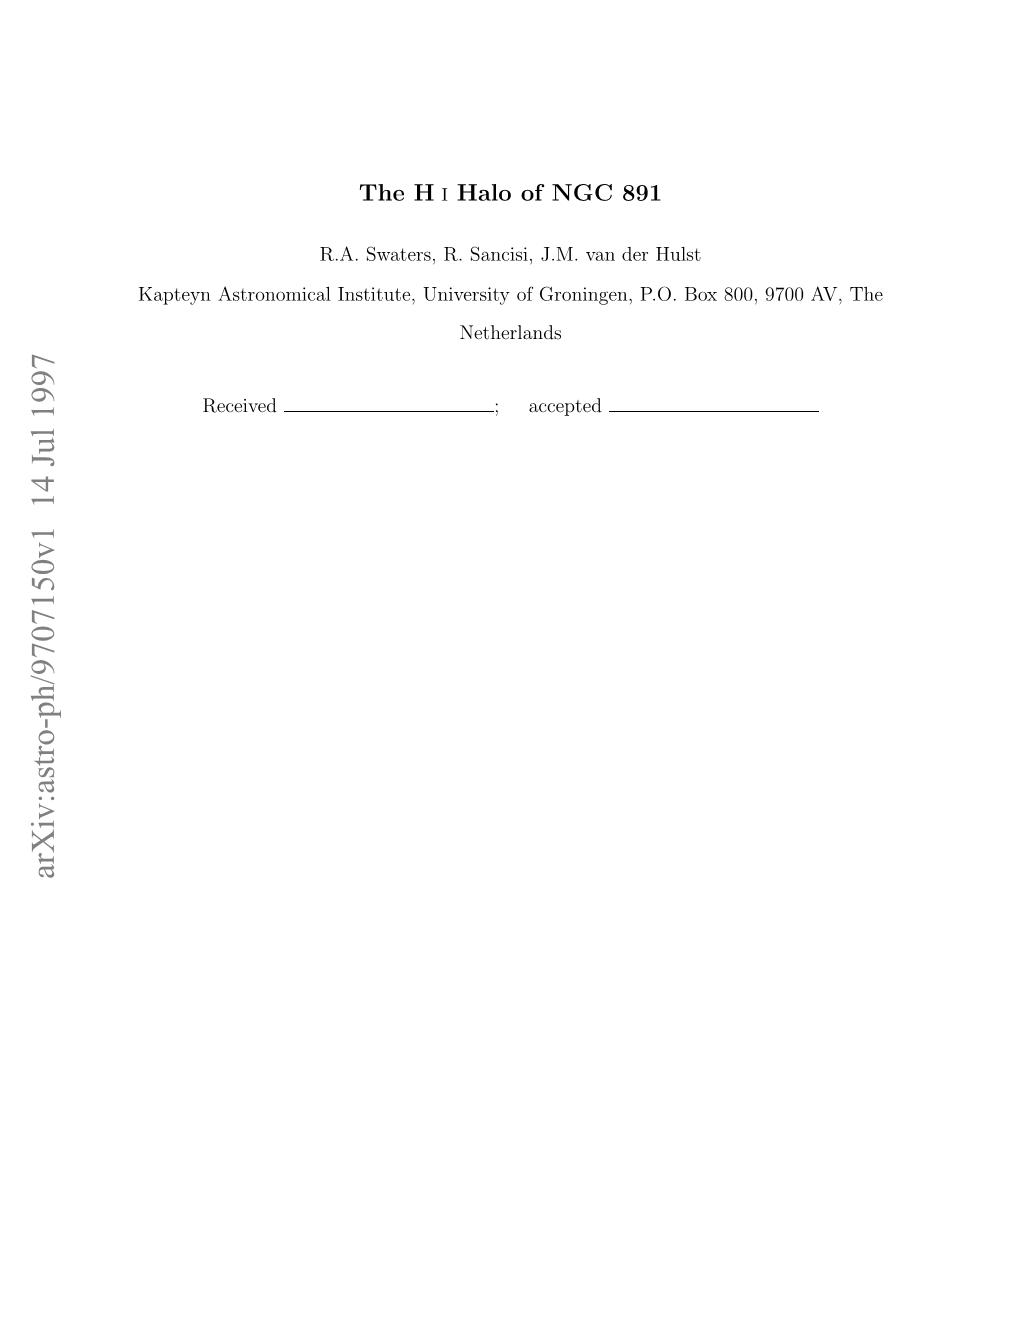 The HI Halo of NGC